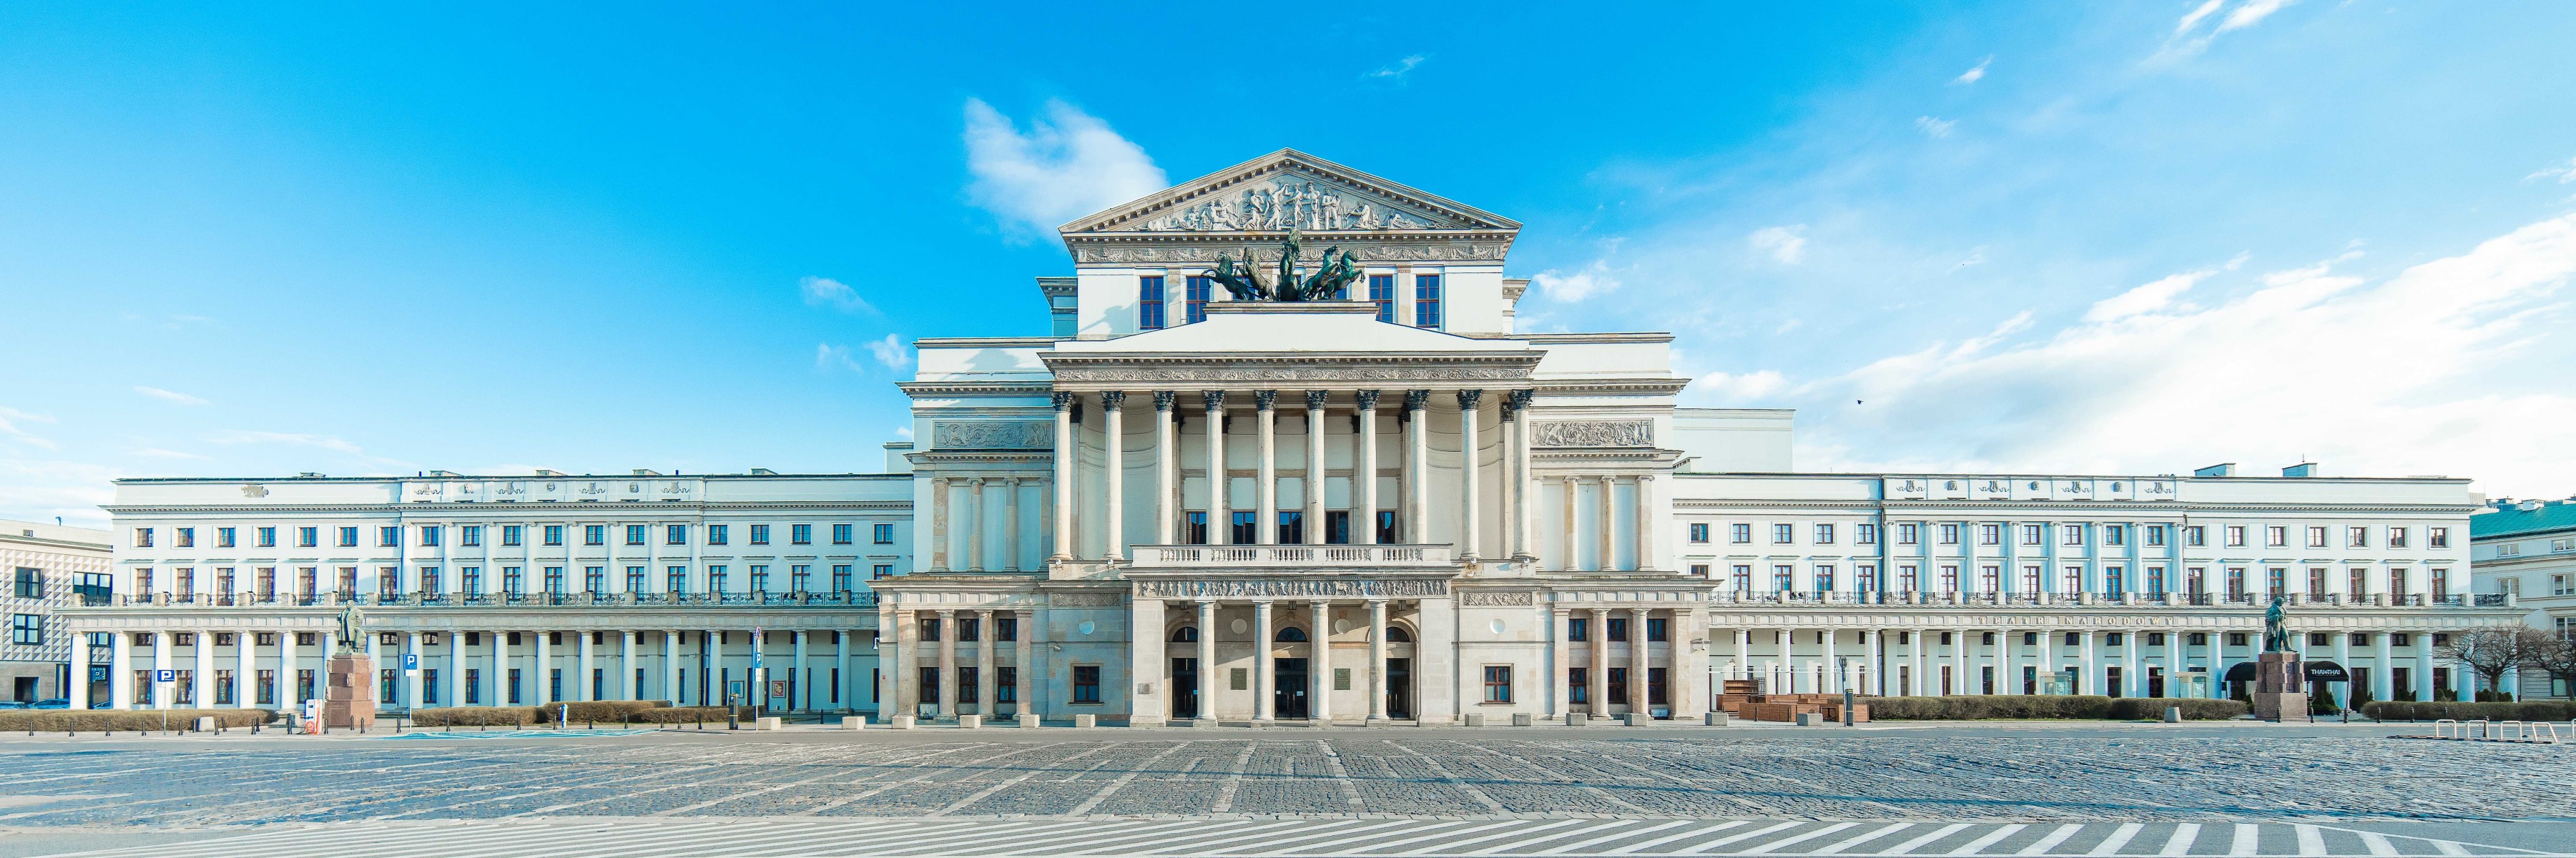 Photo of the Polish National Opera building